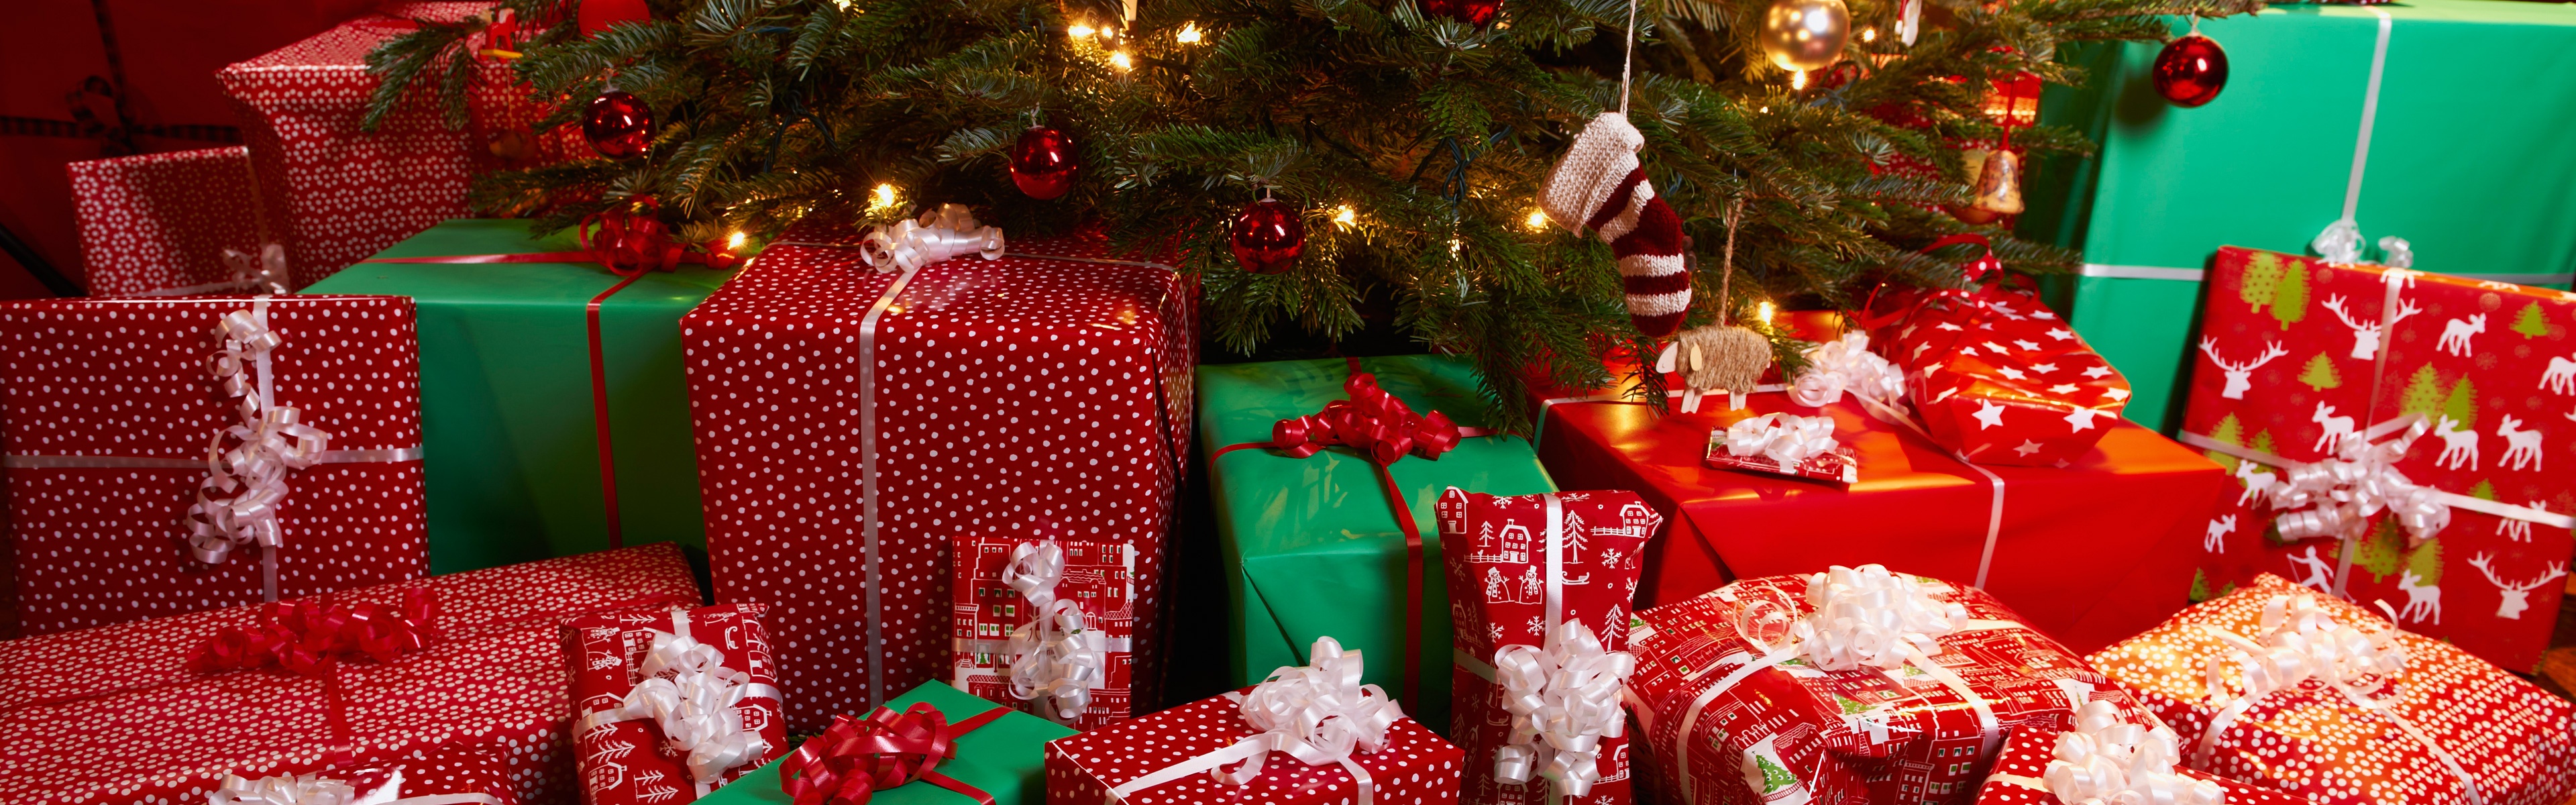 Presents Under Christmas Tree